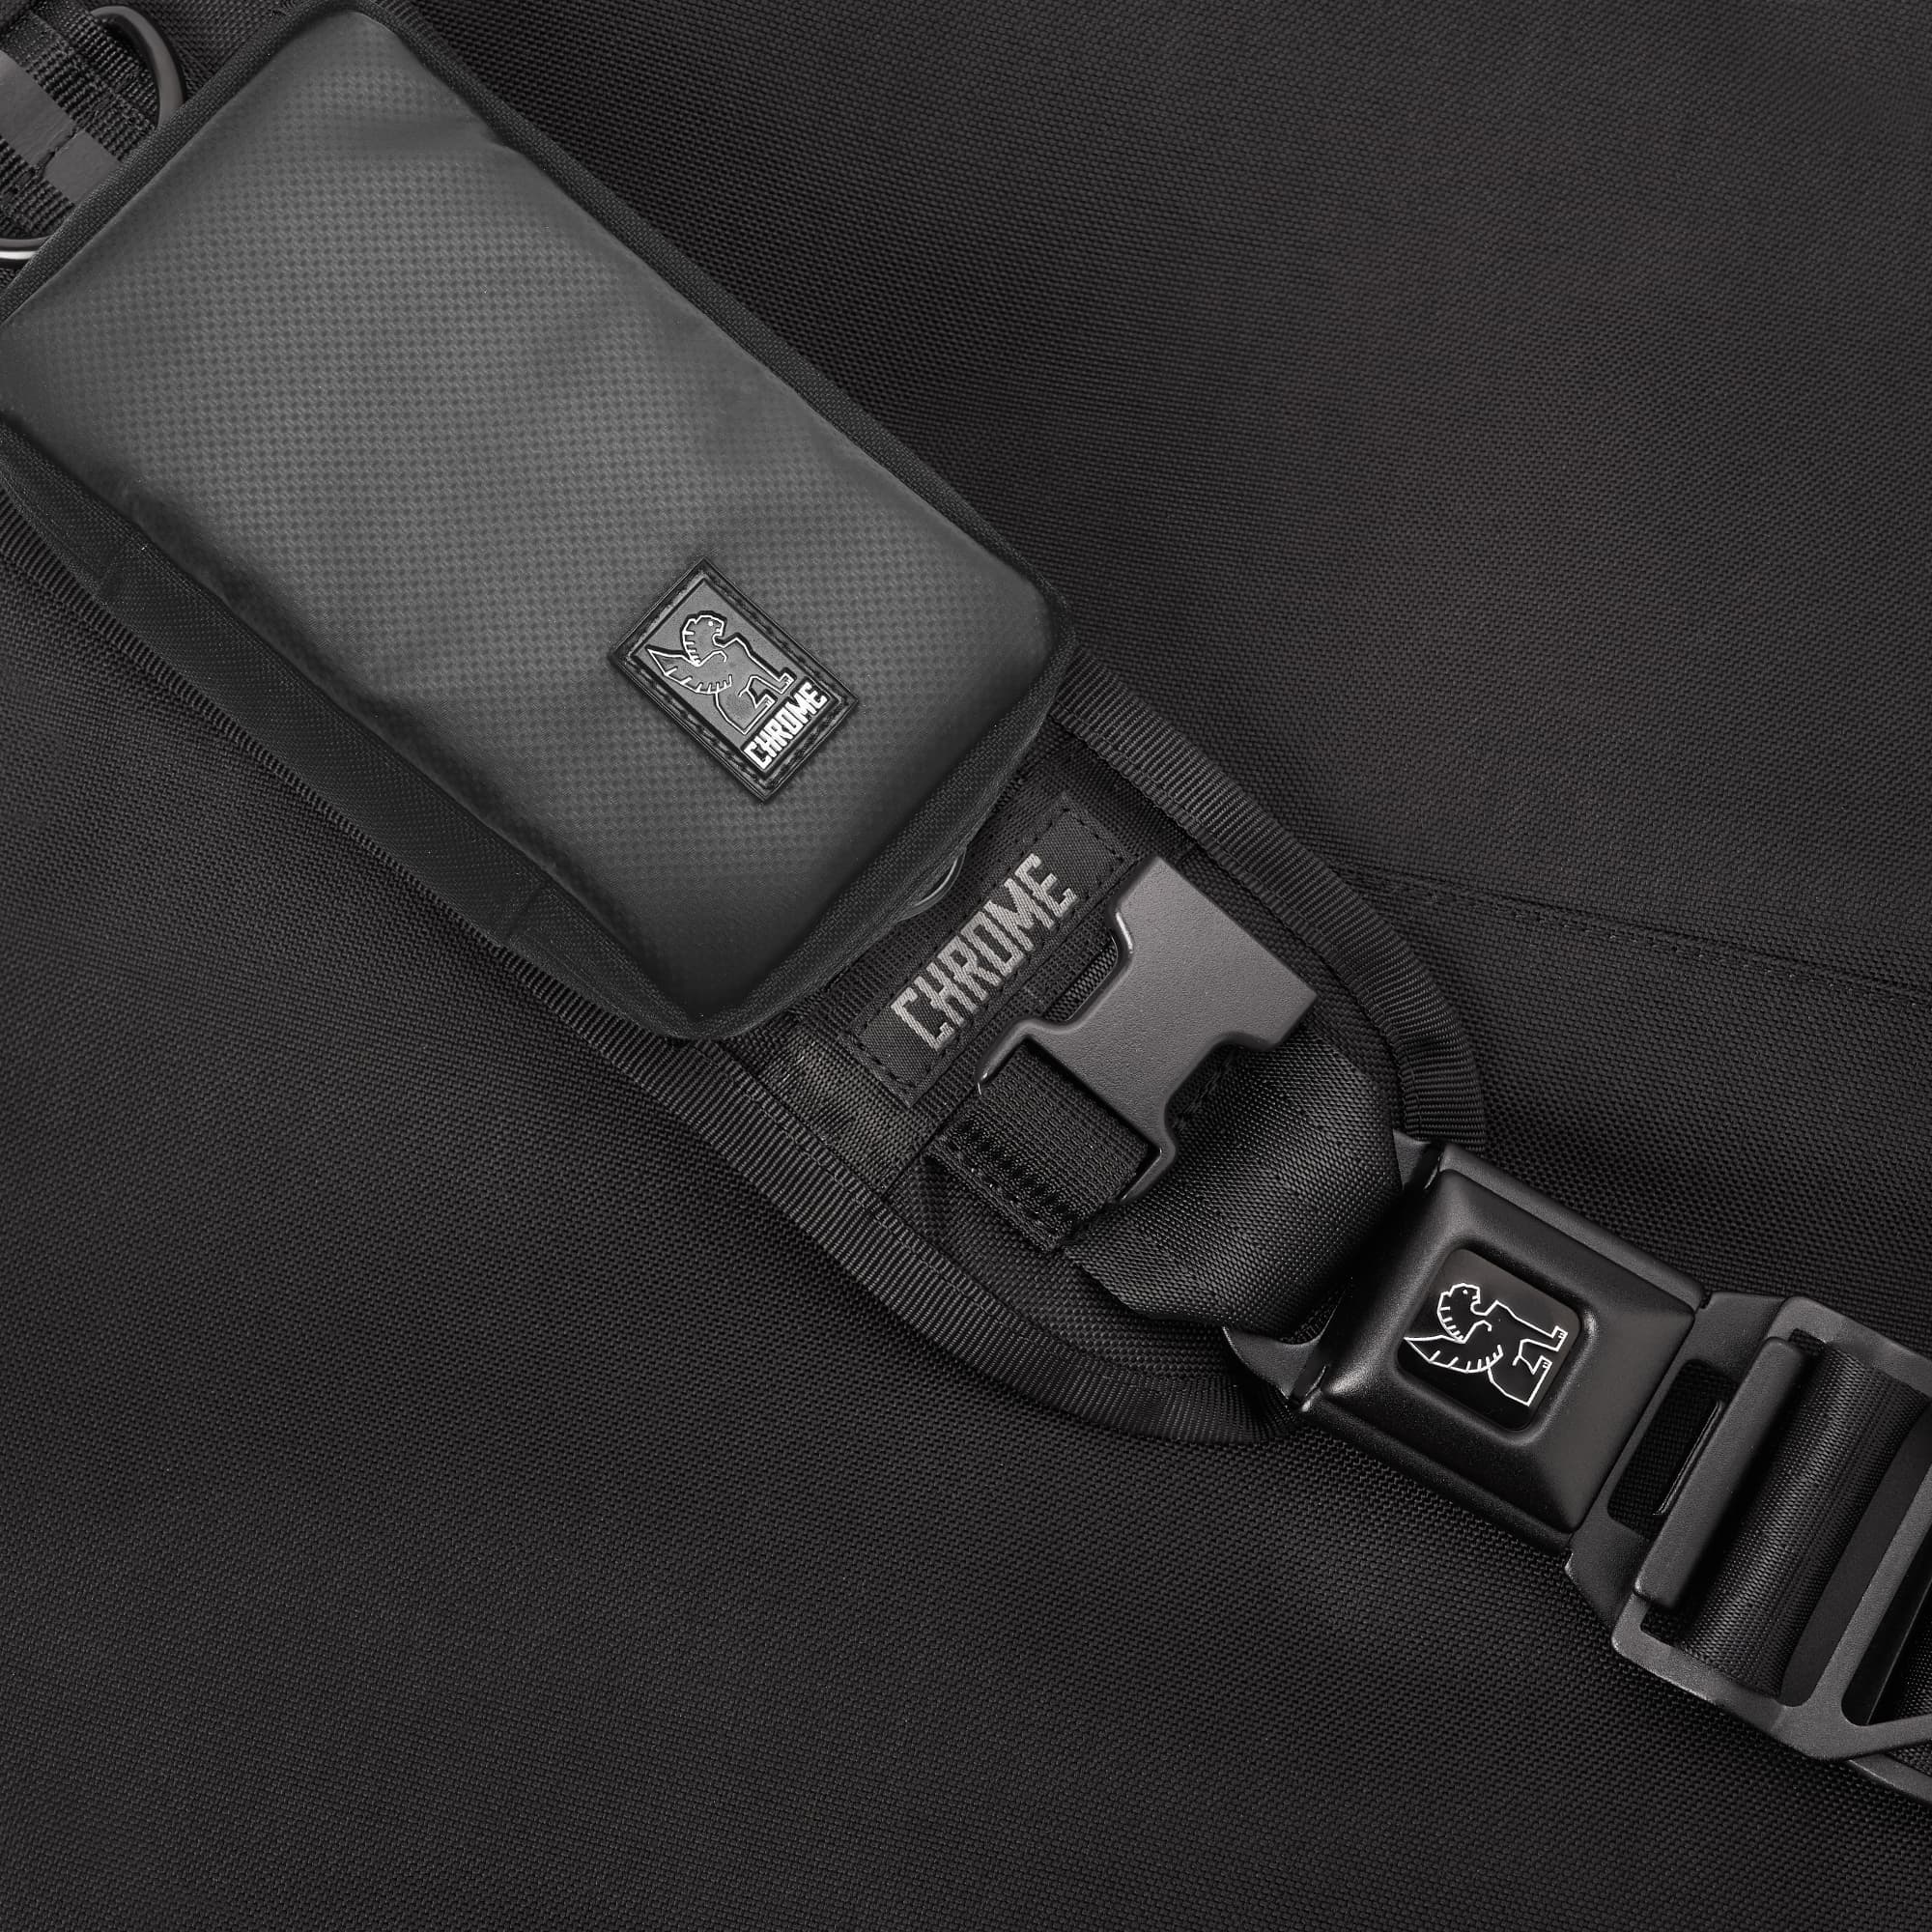 Black Tech Accessory Pouch shown on a strap